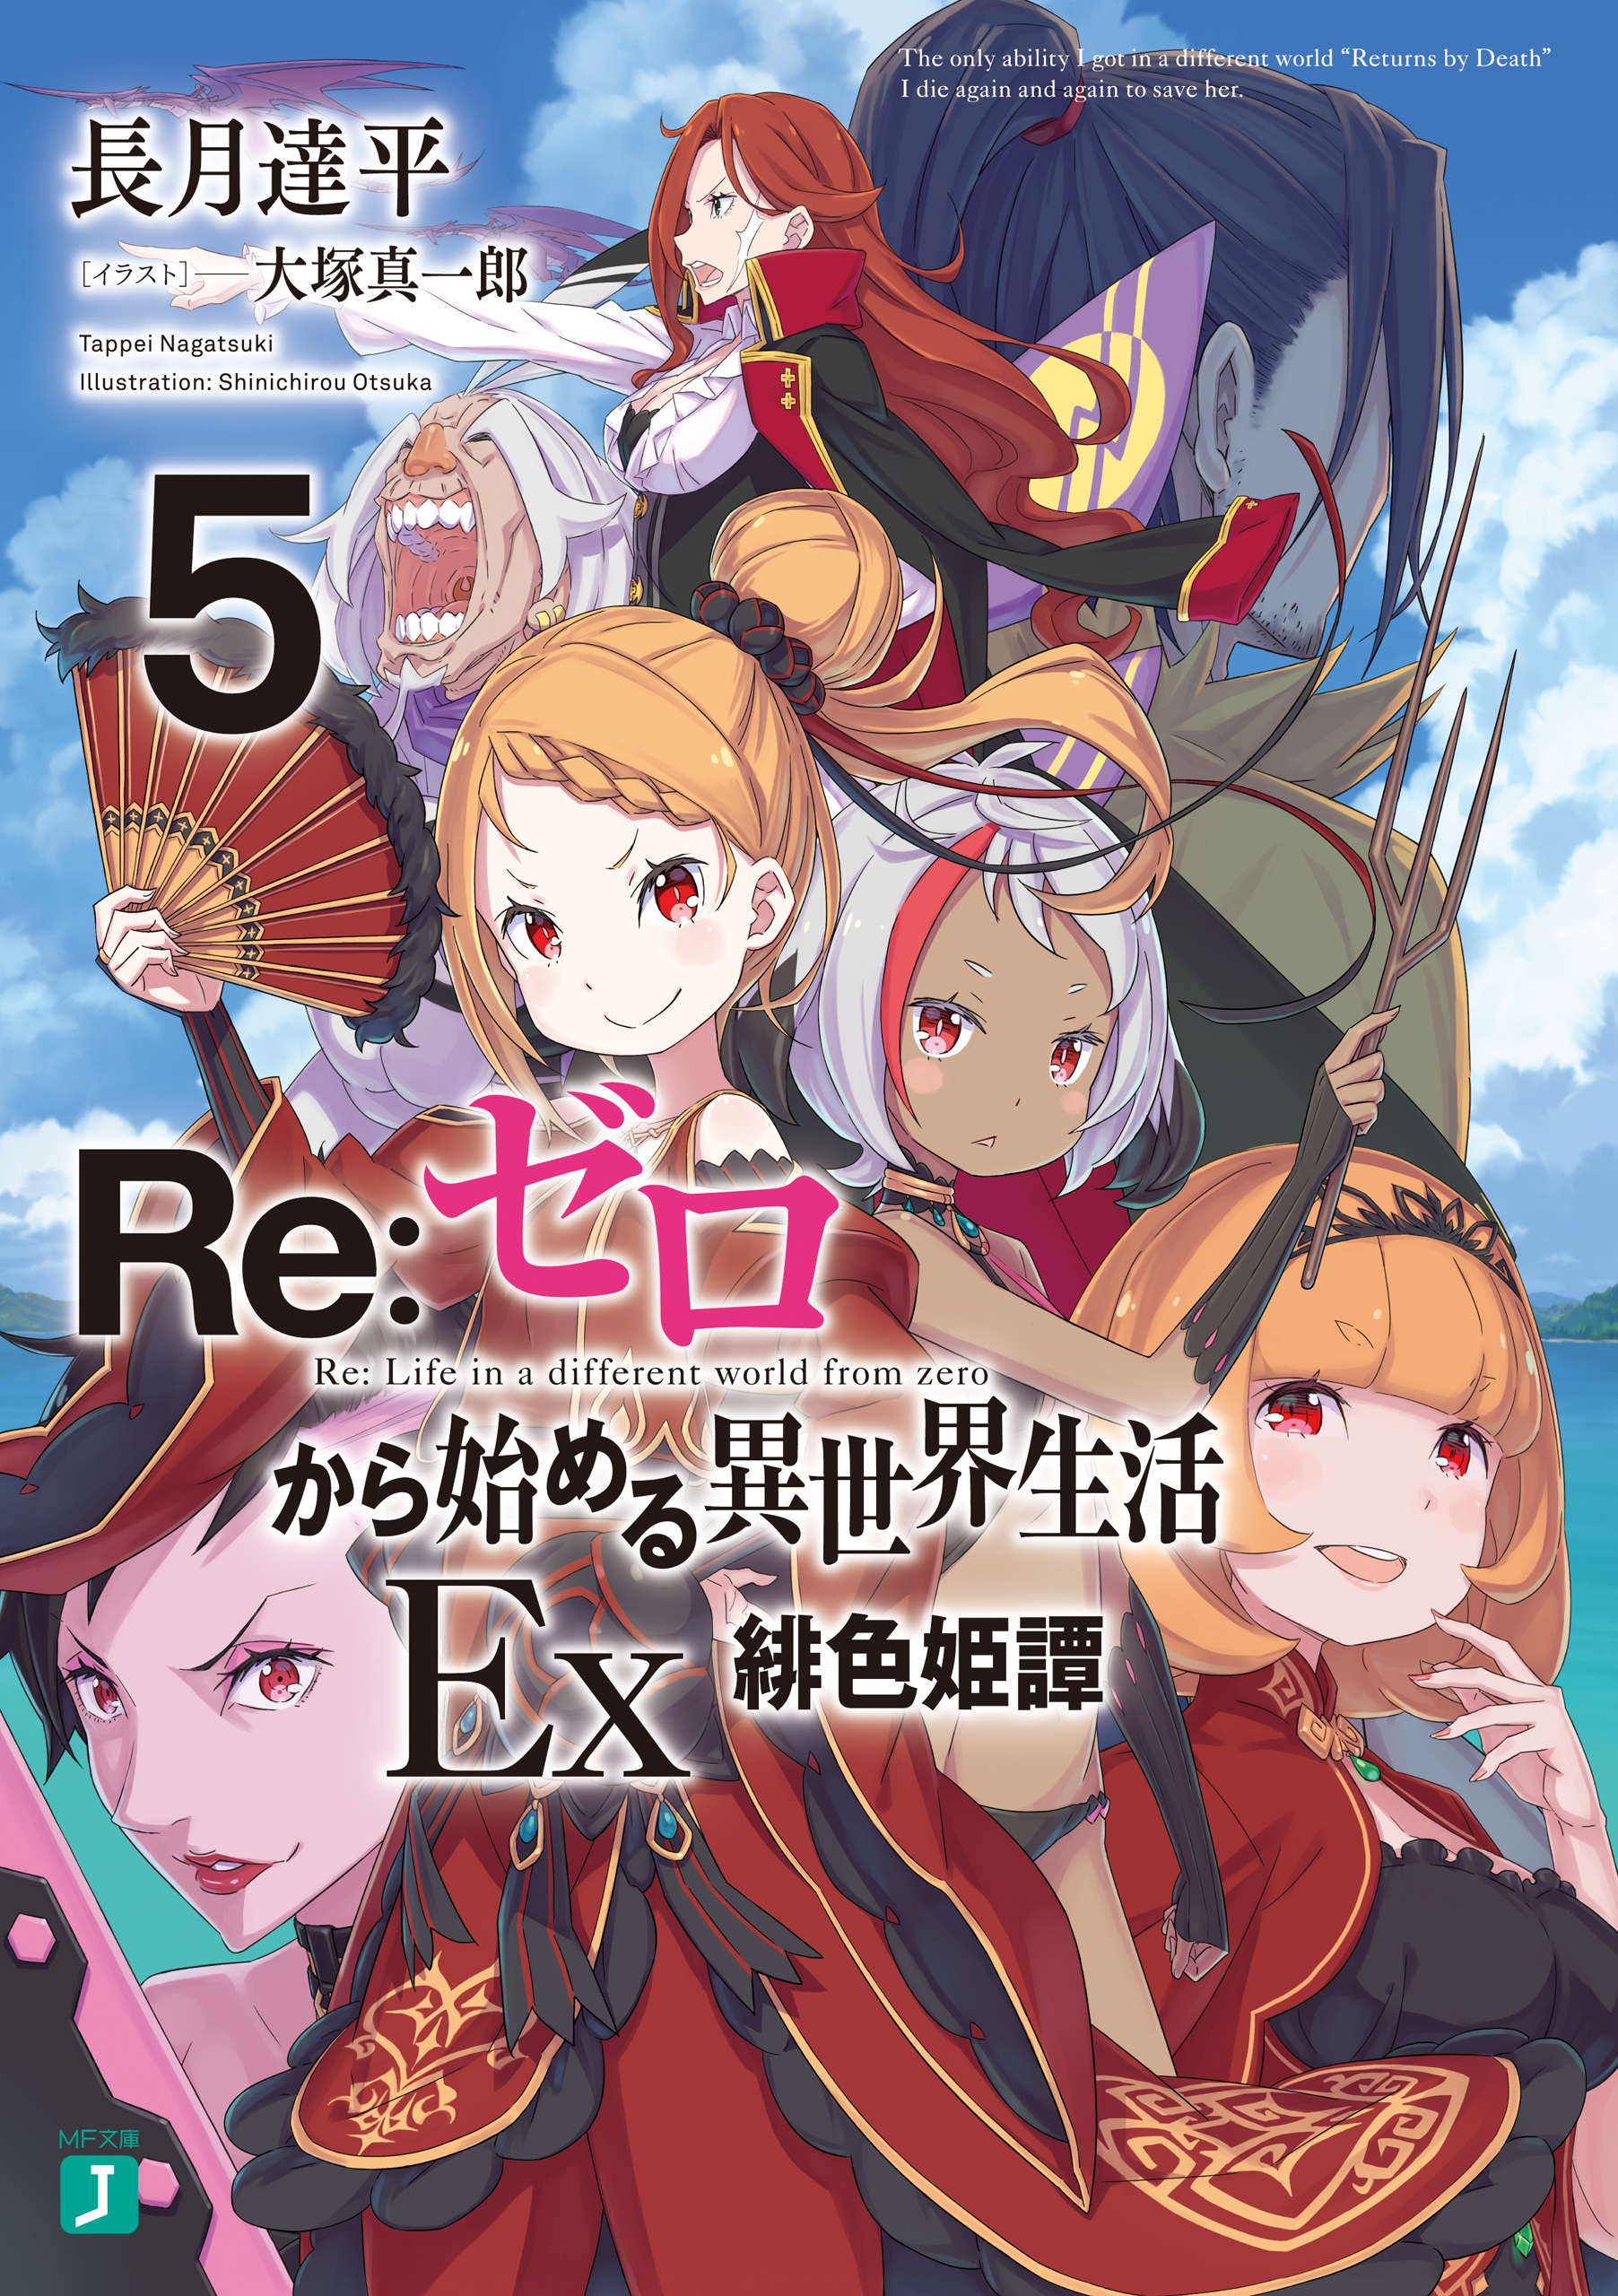 ReZero Animes 3rd Season Reveals 2nd Teaser Visual  News  Anime News  Network